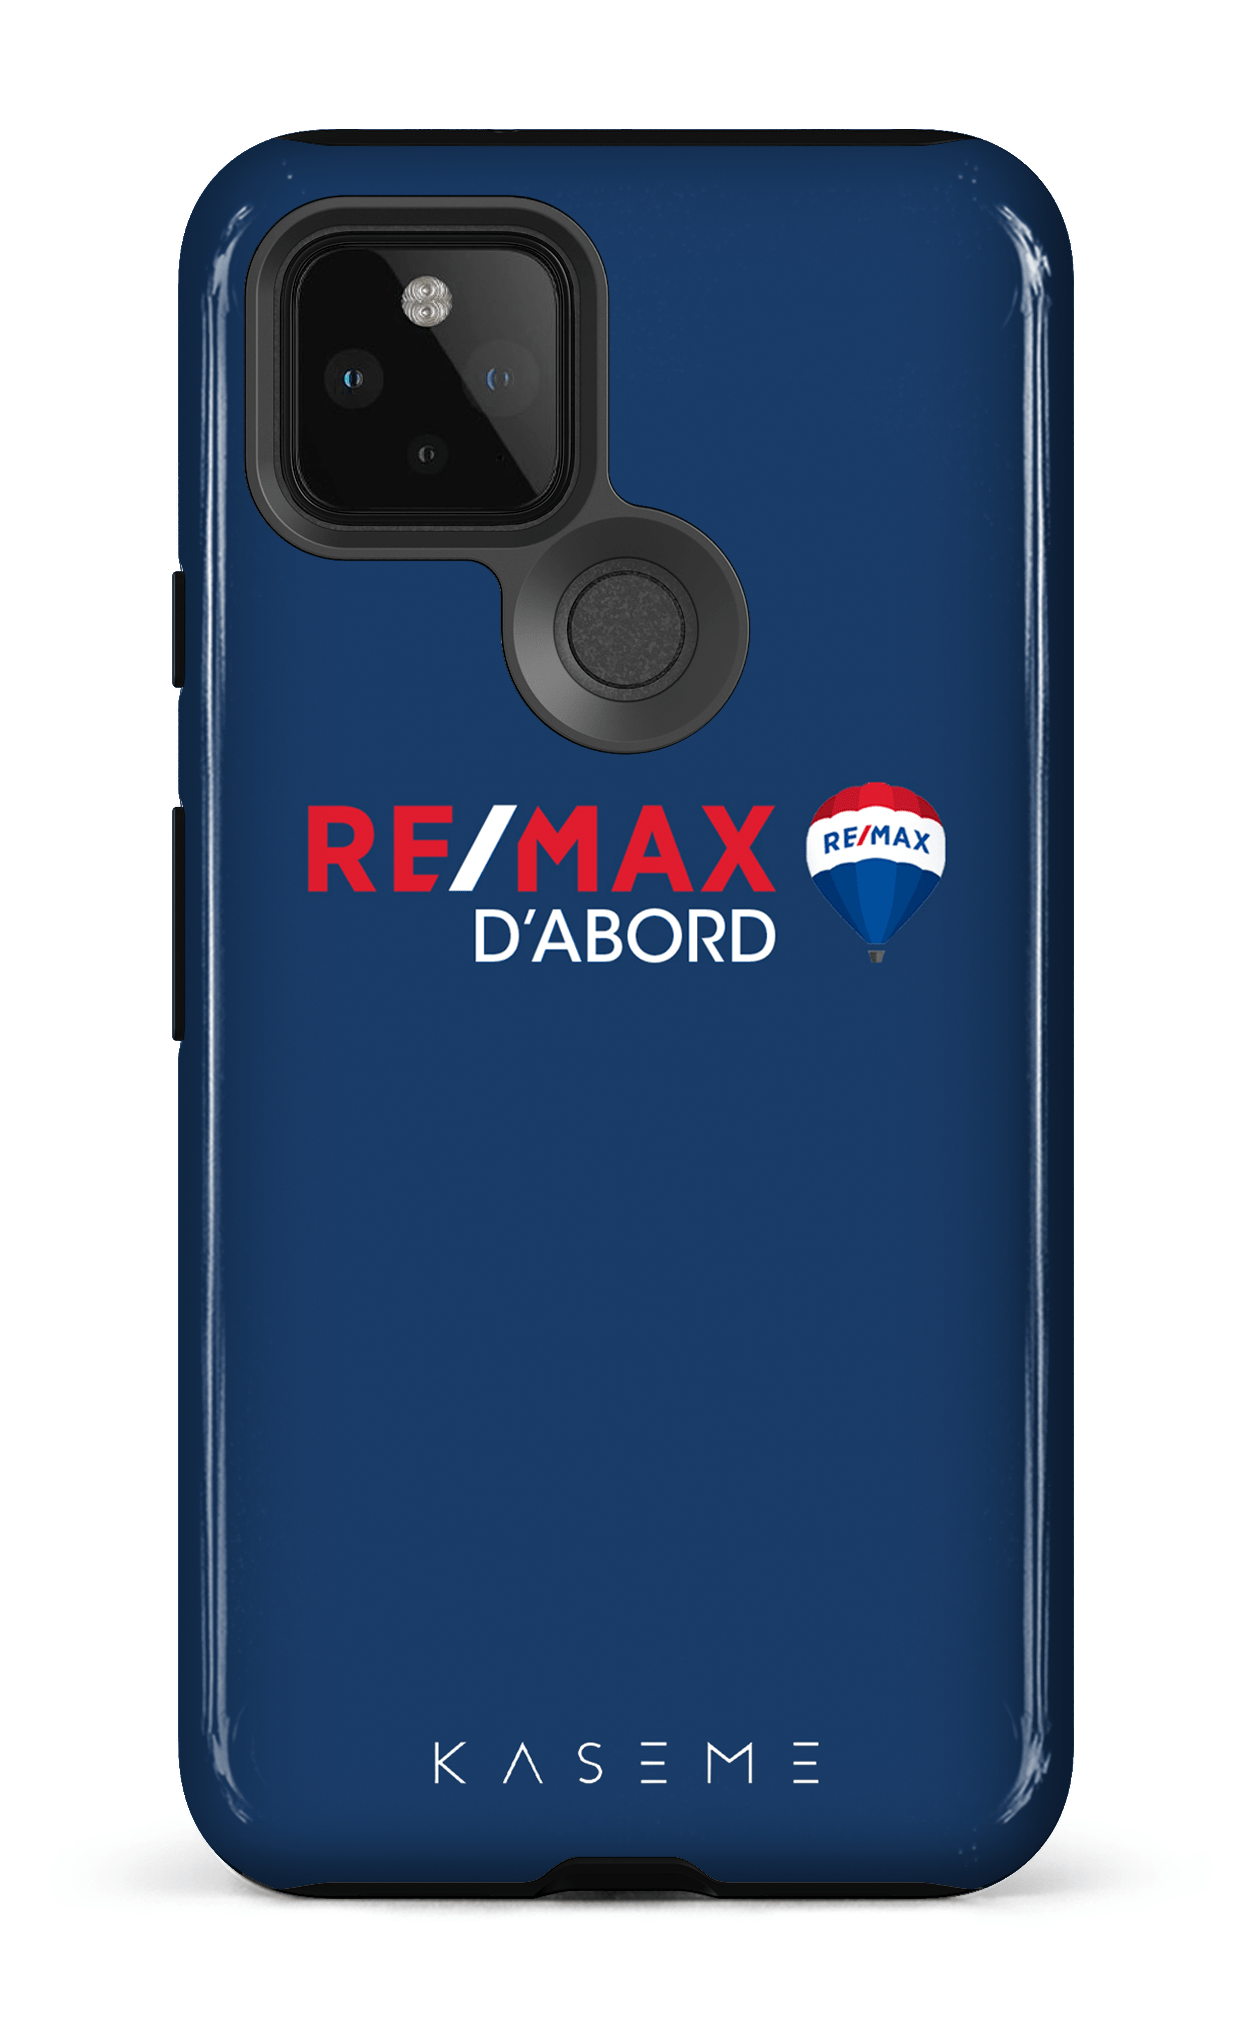 Remax D'abord Bleu - Google Pixel 5